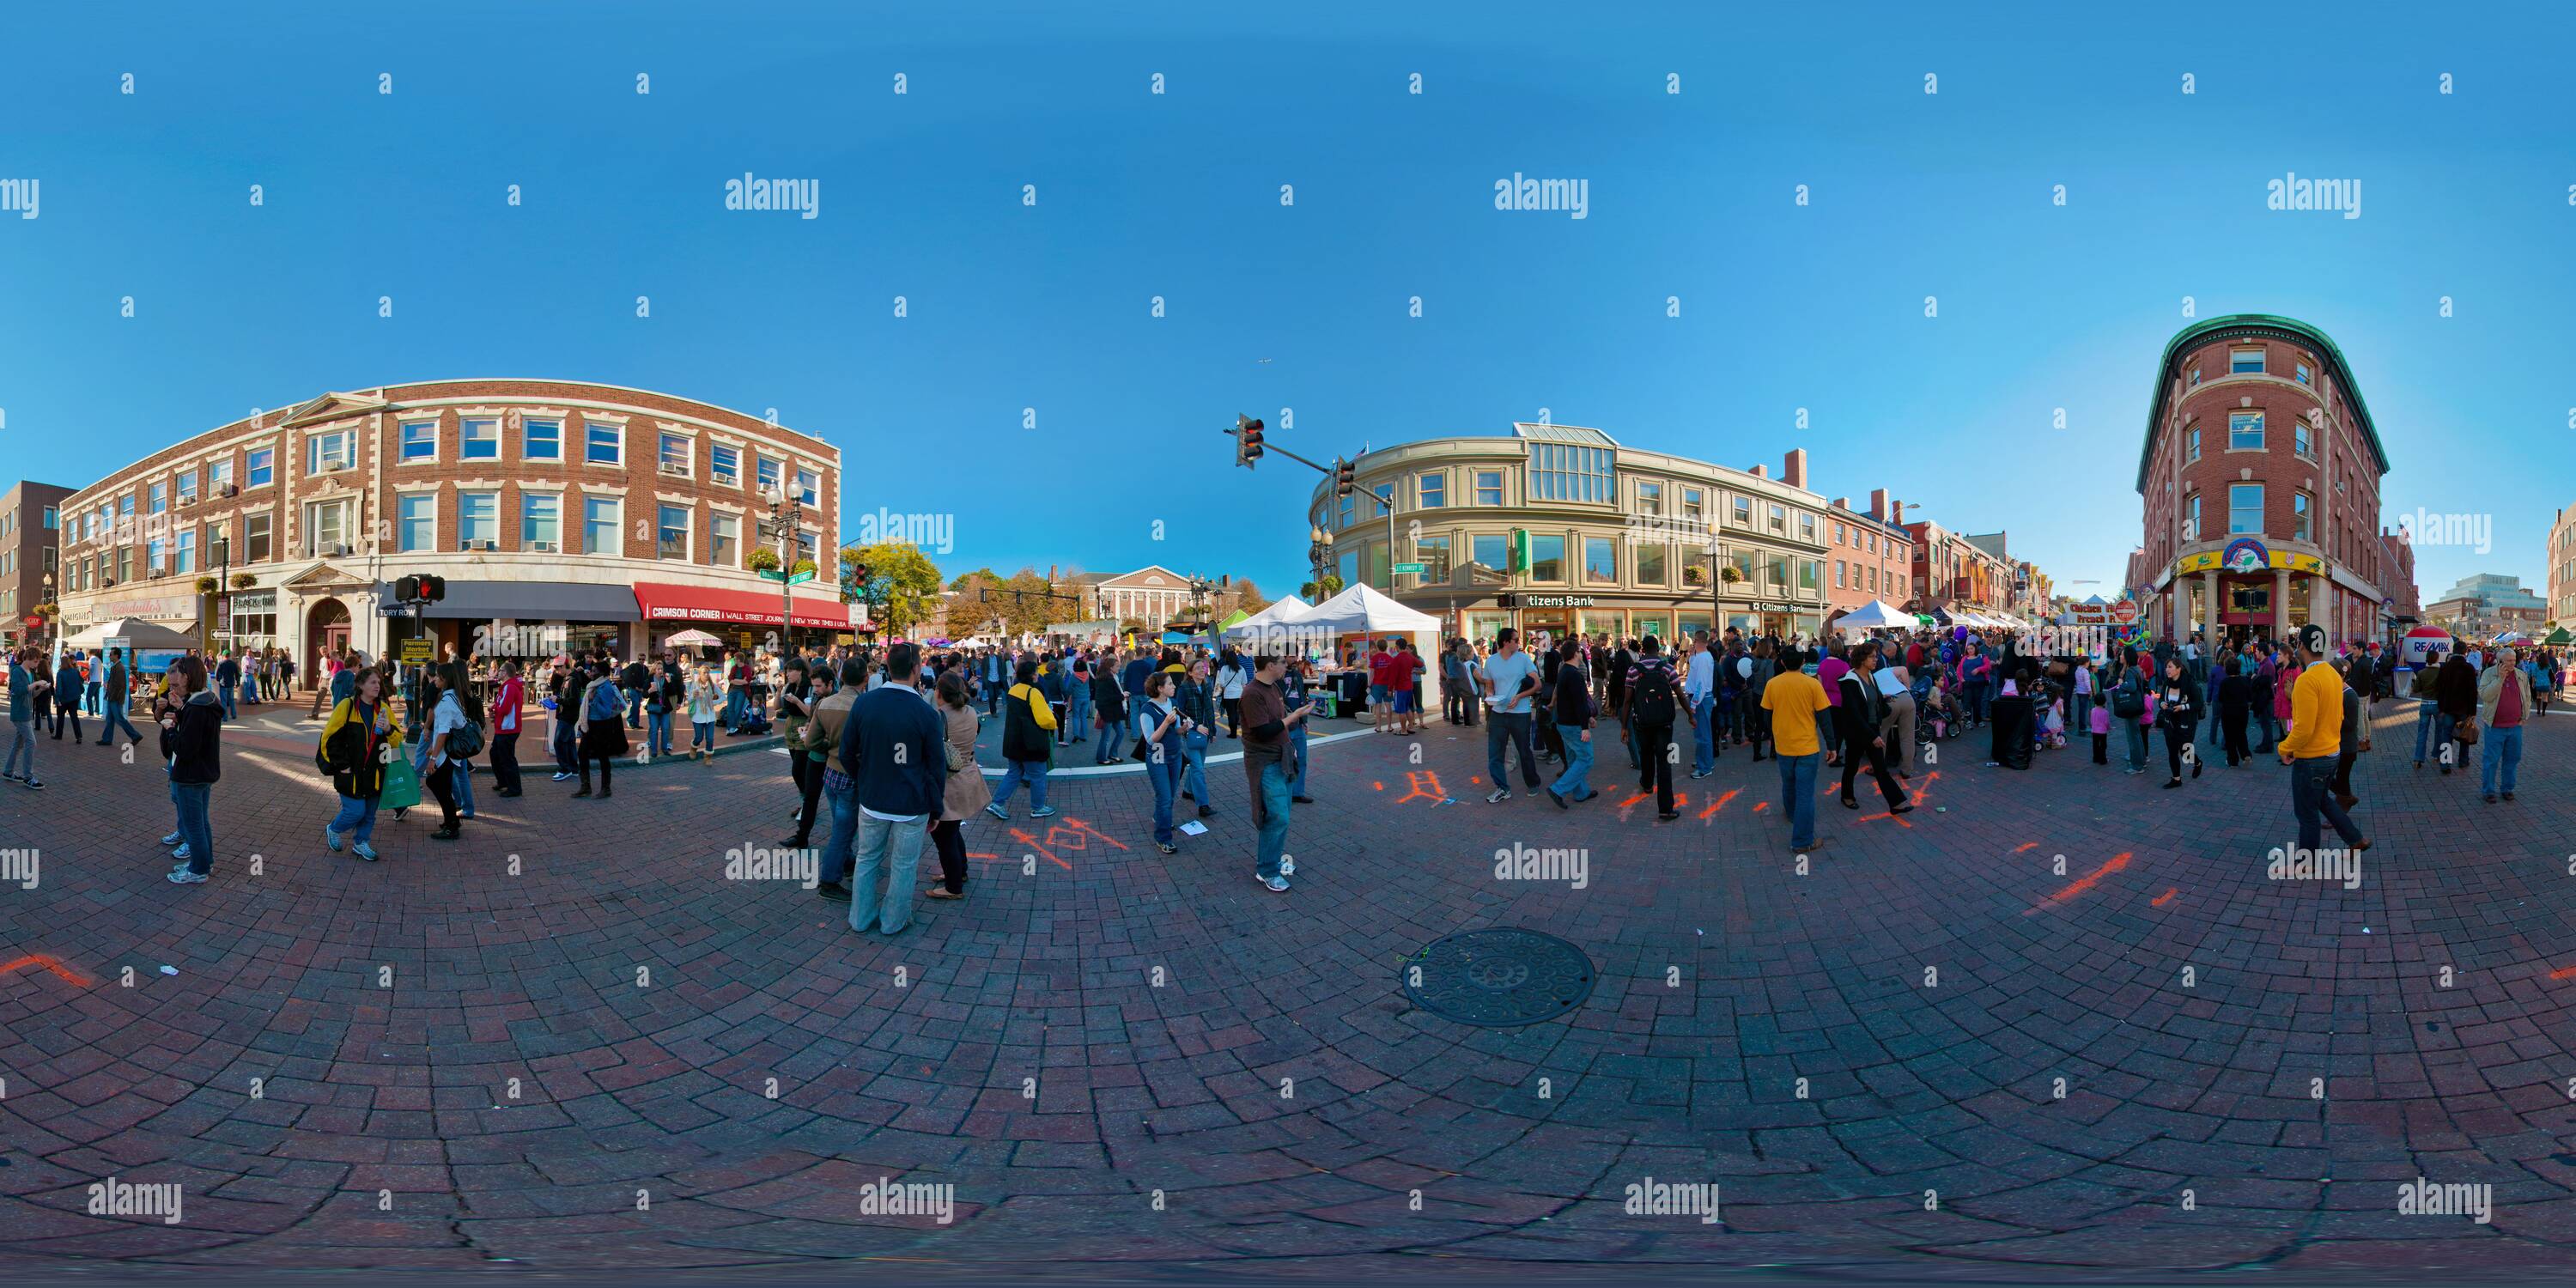 360 degree panoramic view of Oktoberfest Harvard Square